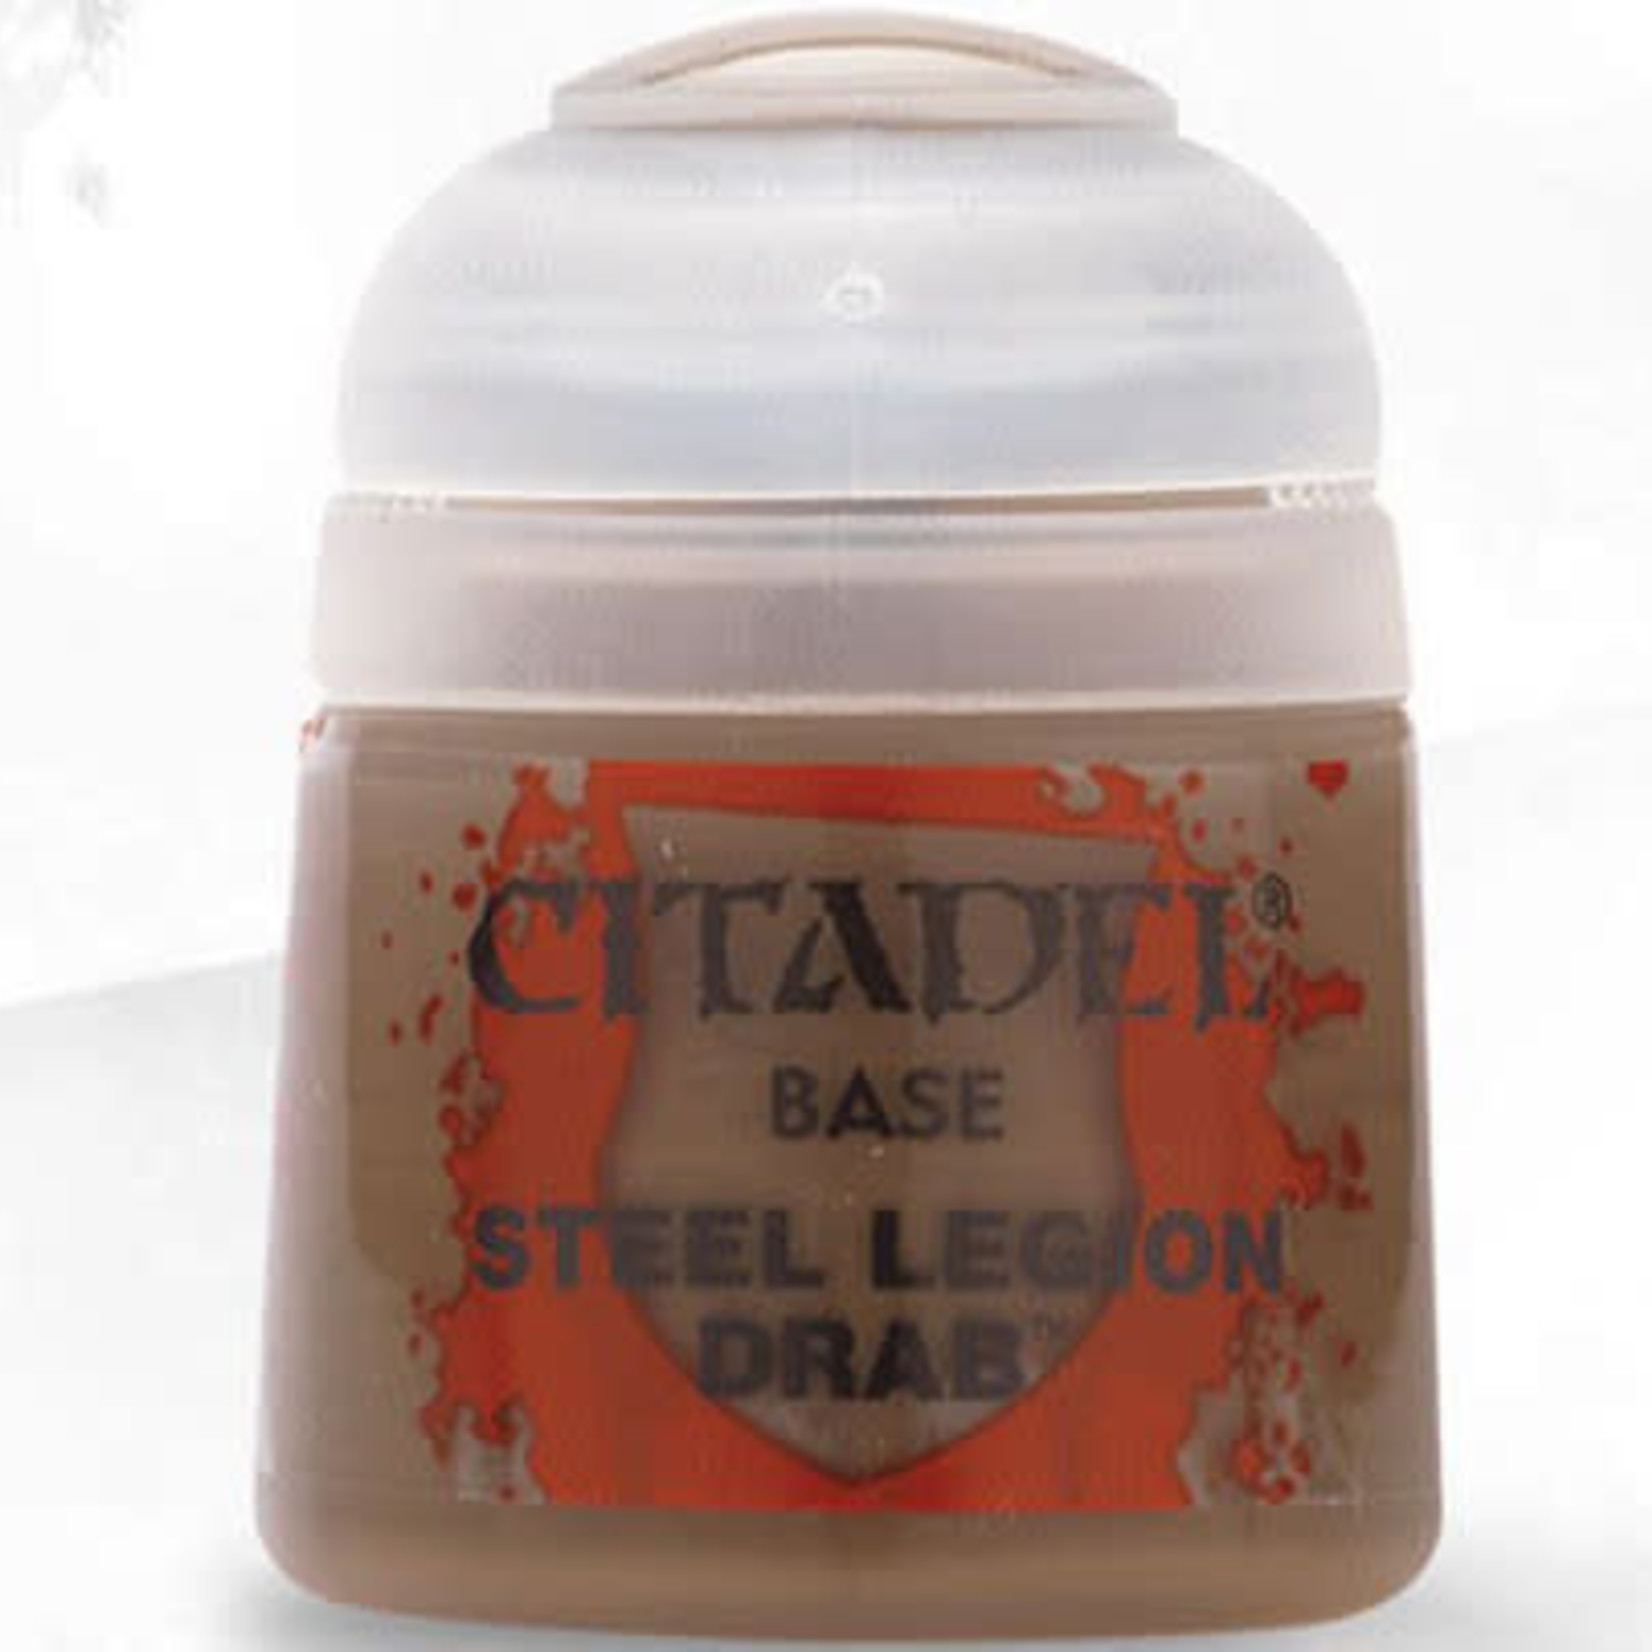 Citadel Citadel Paint - Base: Steel Legion Drab